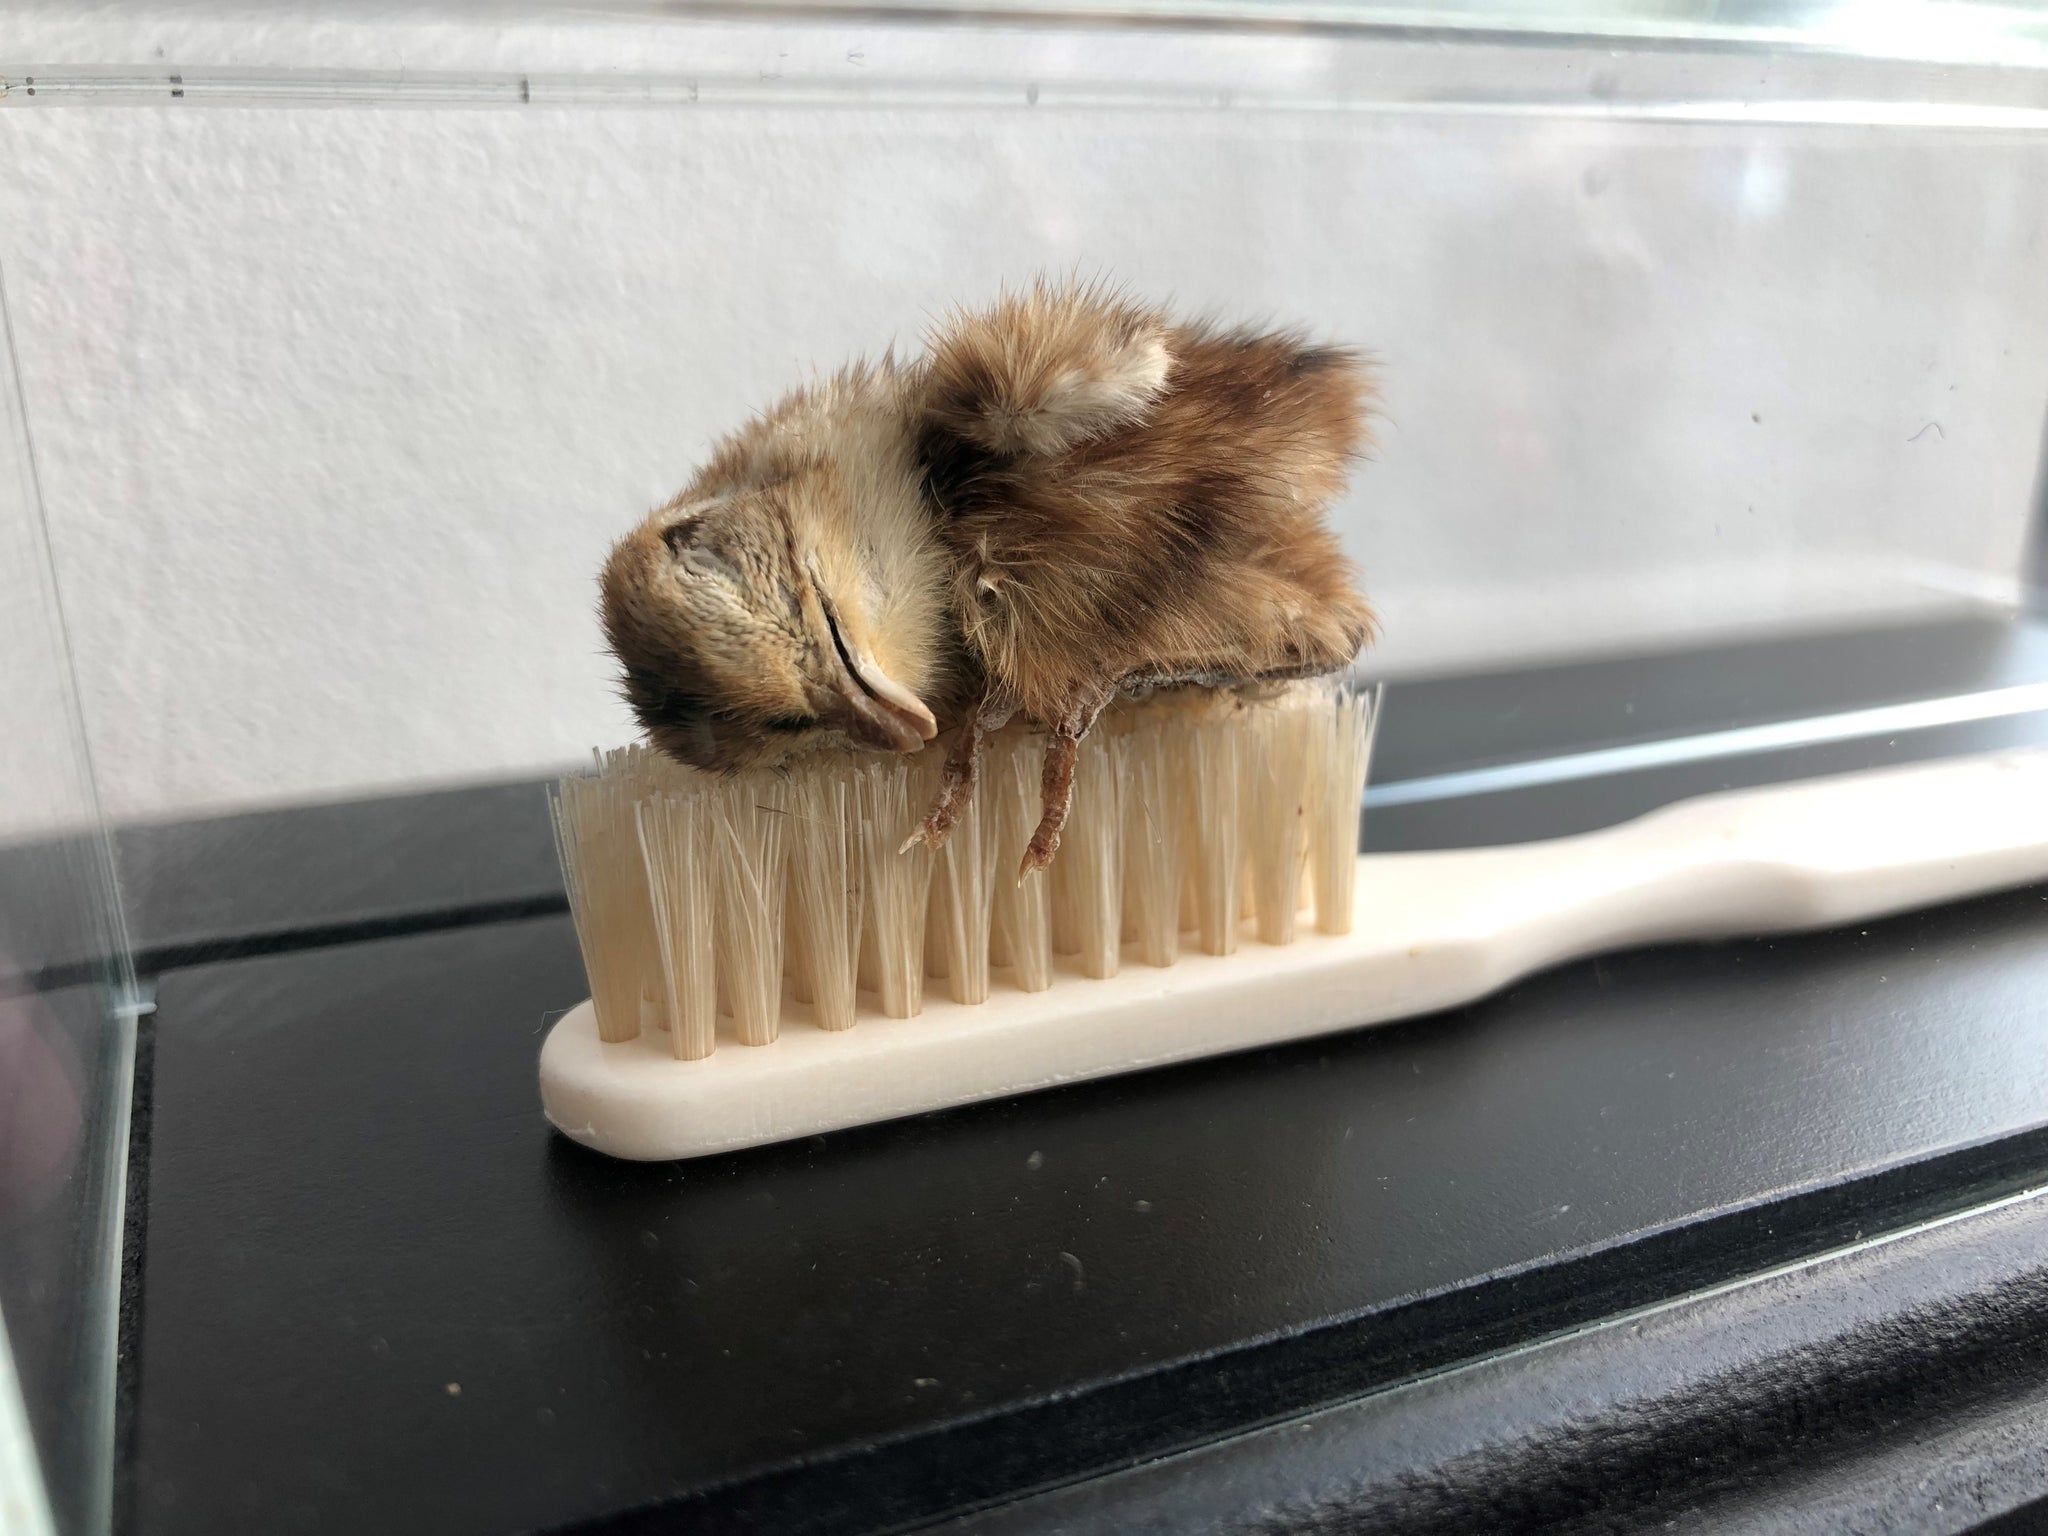 Polly Morgan - Bad Breath Toothbrush